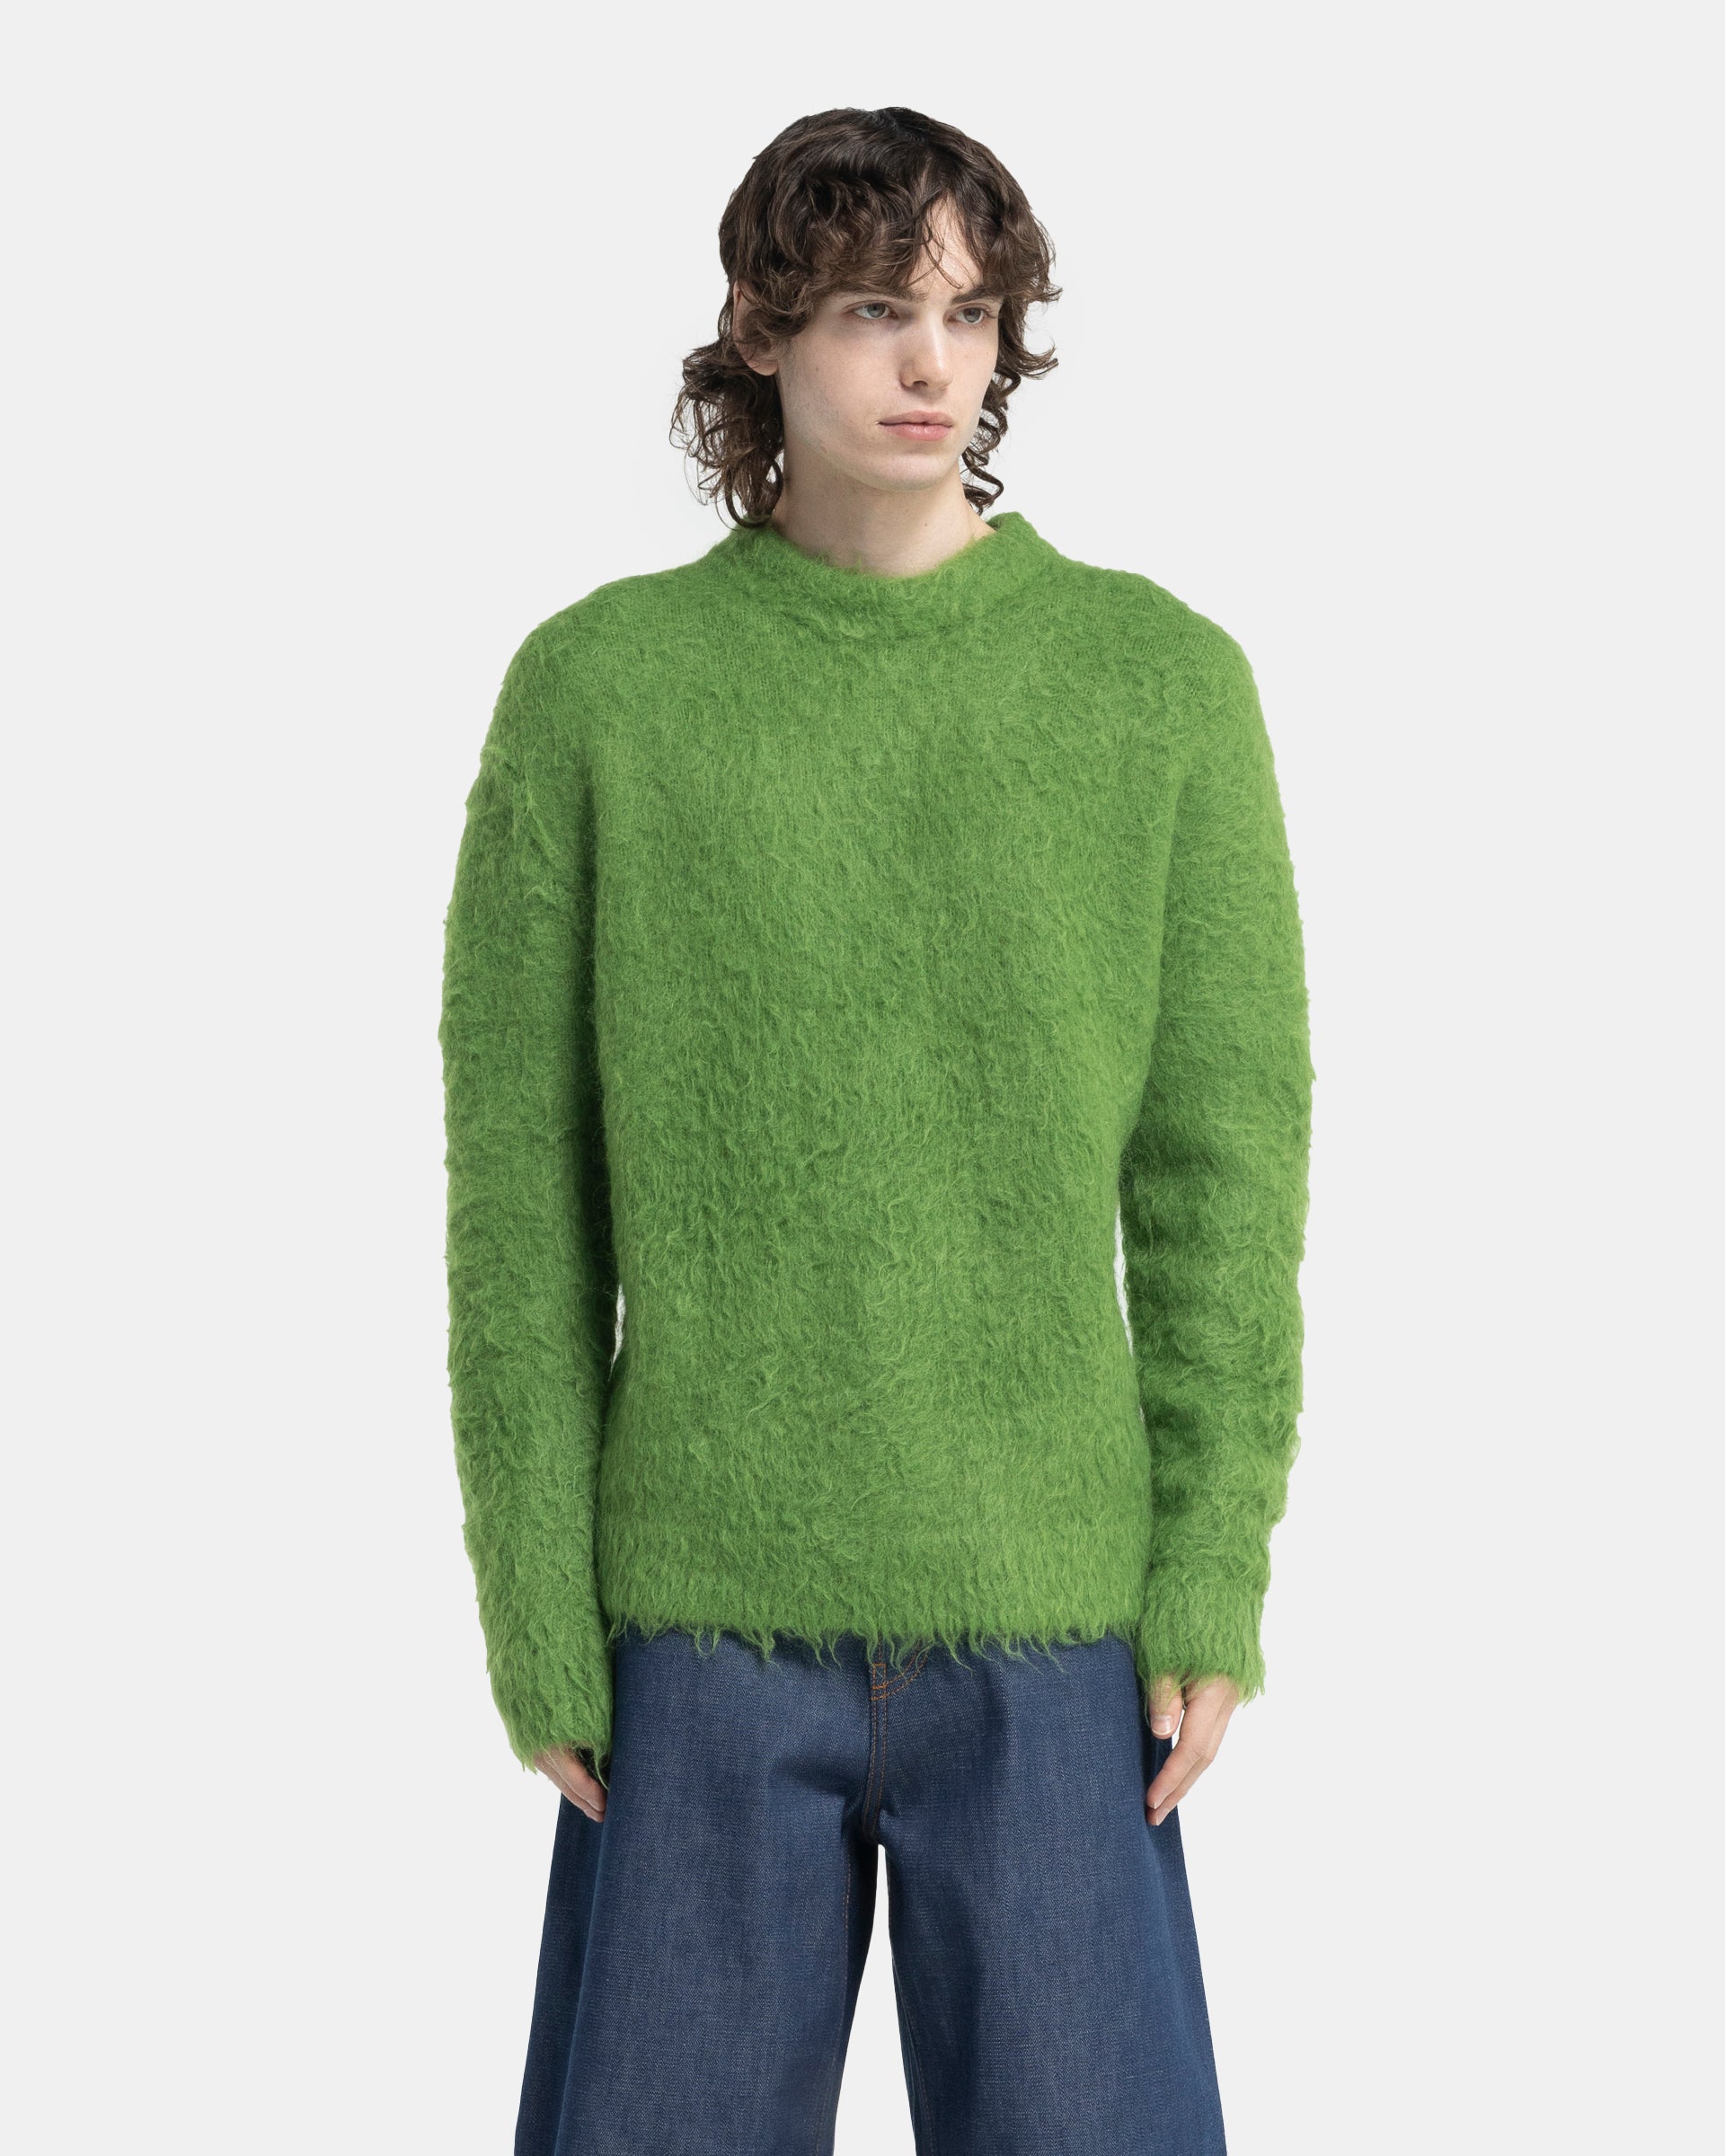 Mohair Wool Jumper in Pear Green